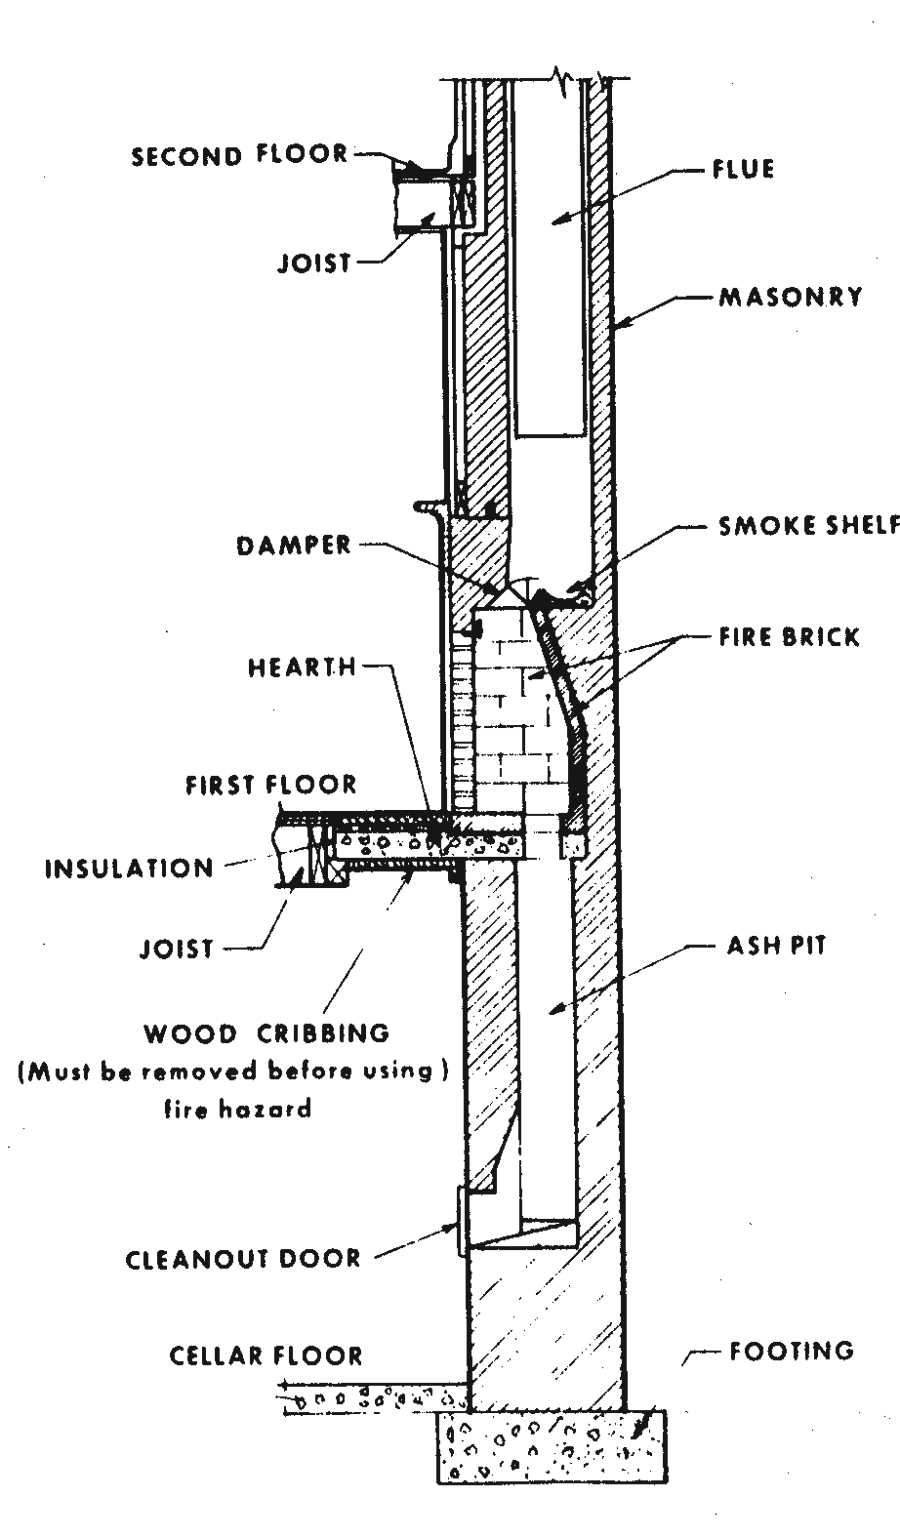 Figure 12.23. Fireplace Construction